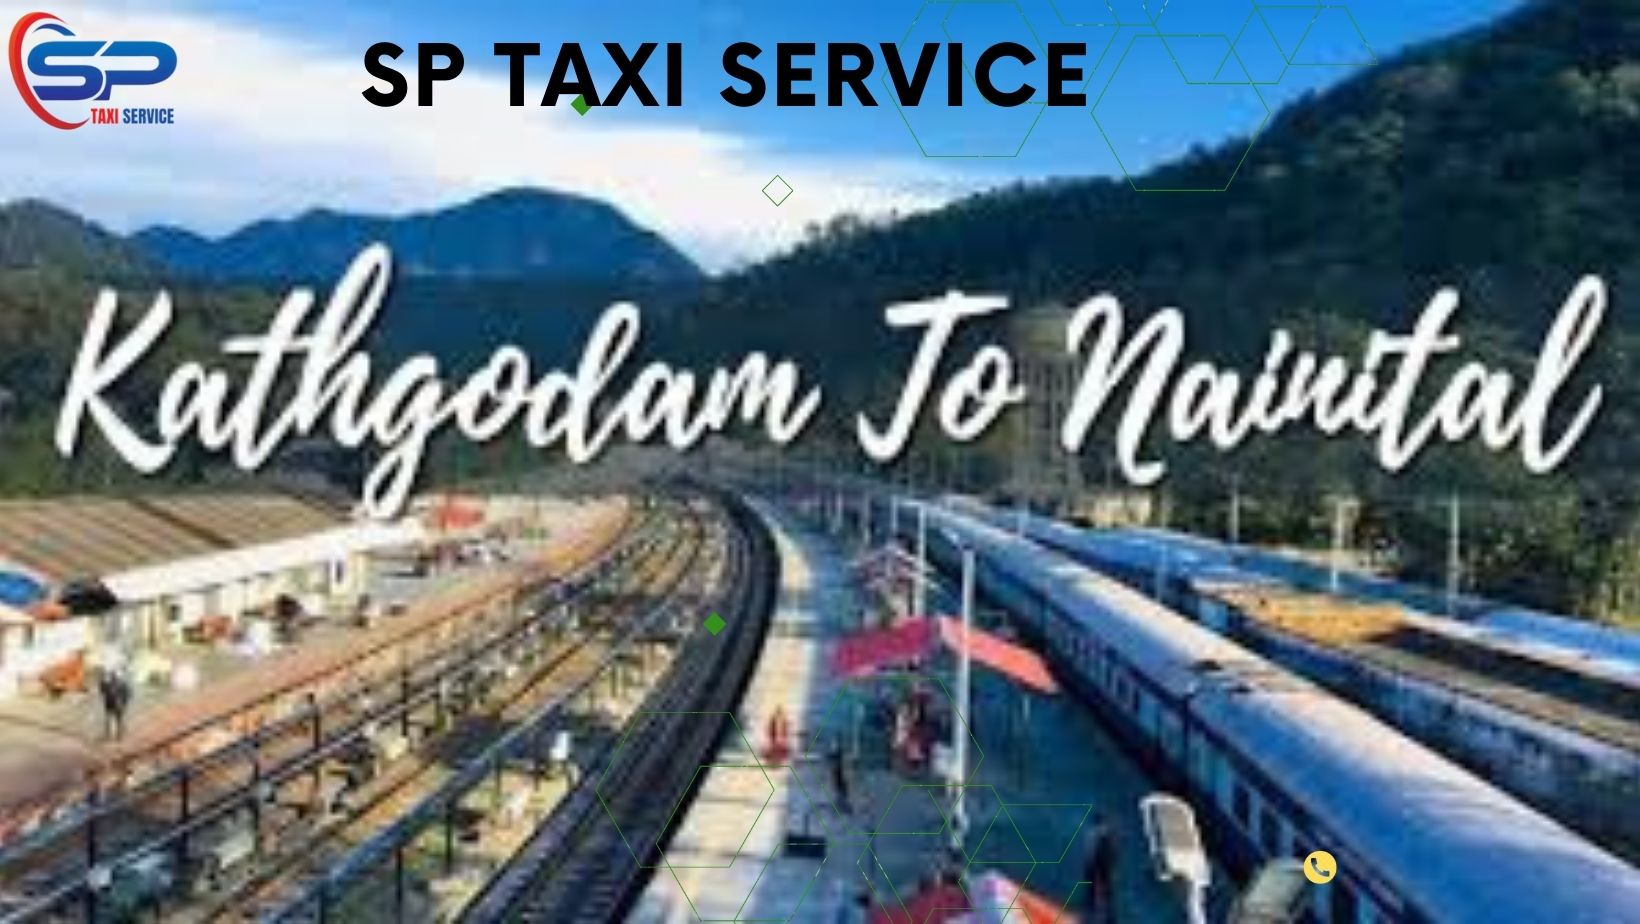 Kathgodam Taxi service